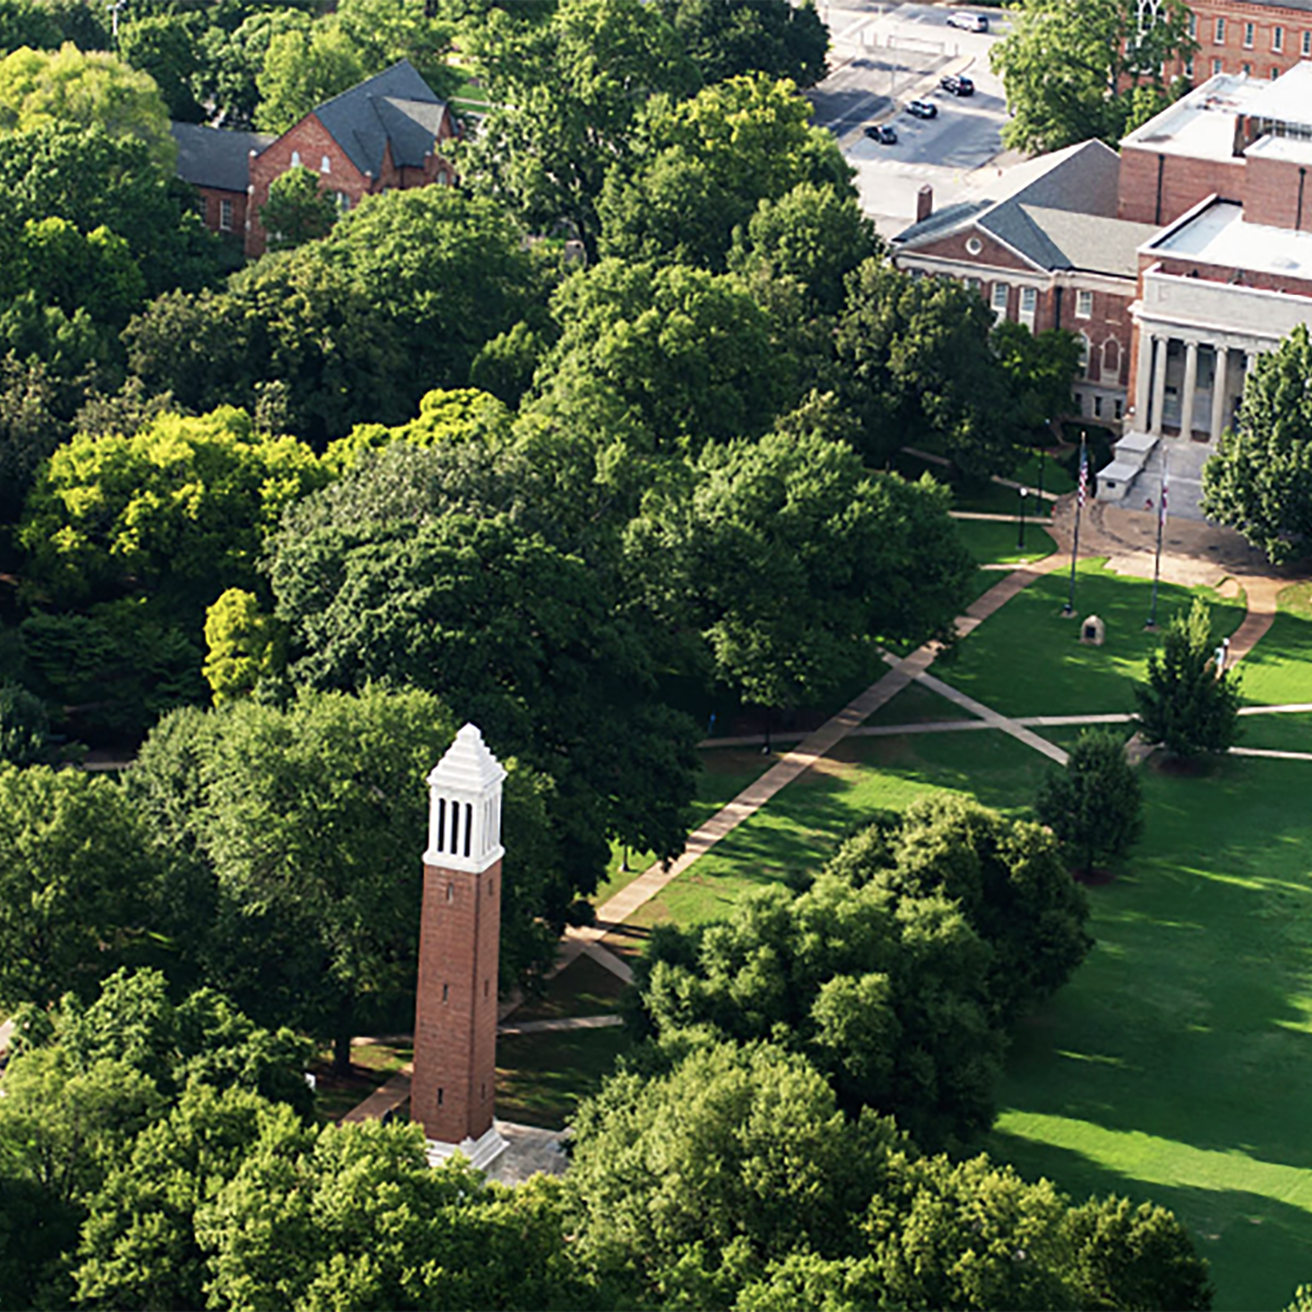 University of Alabama campus